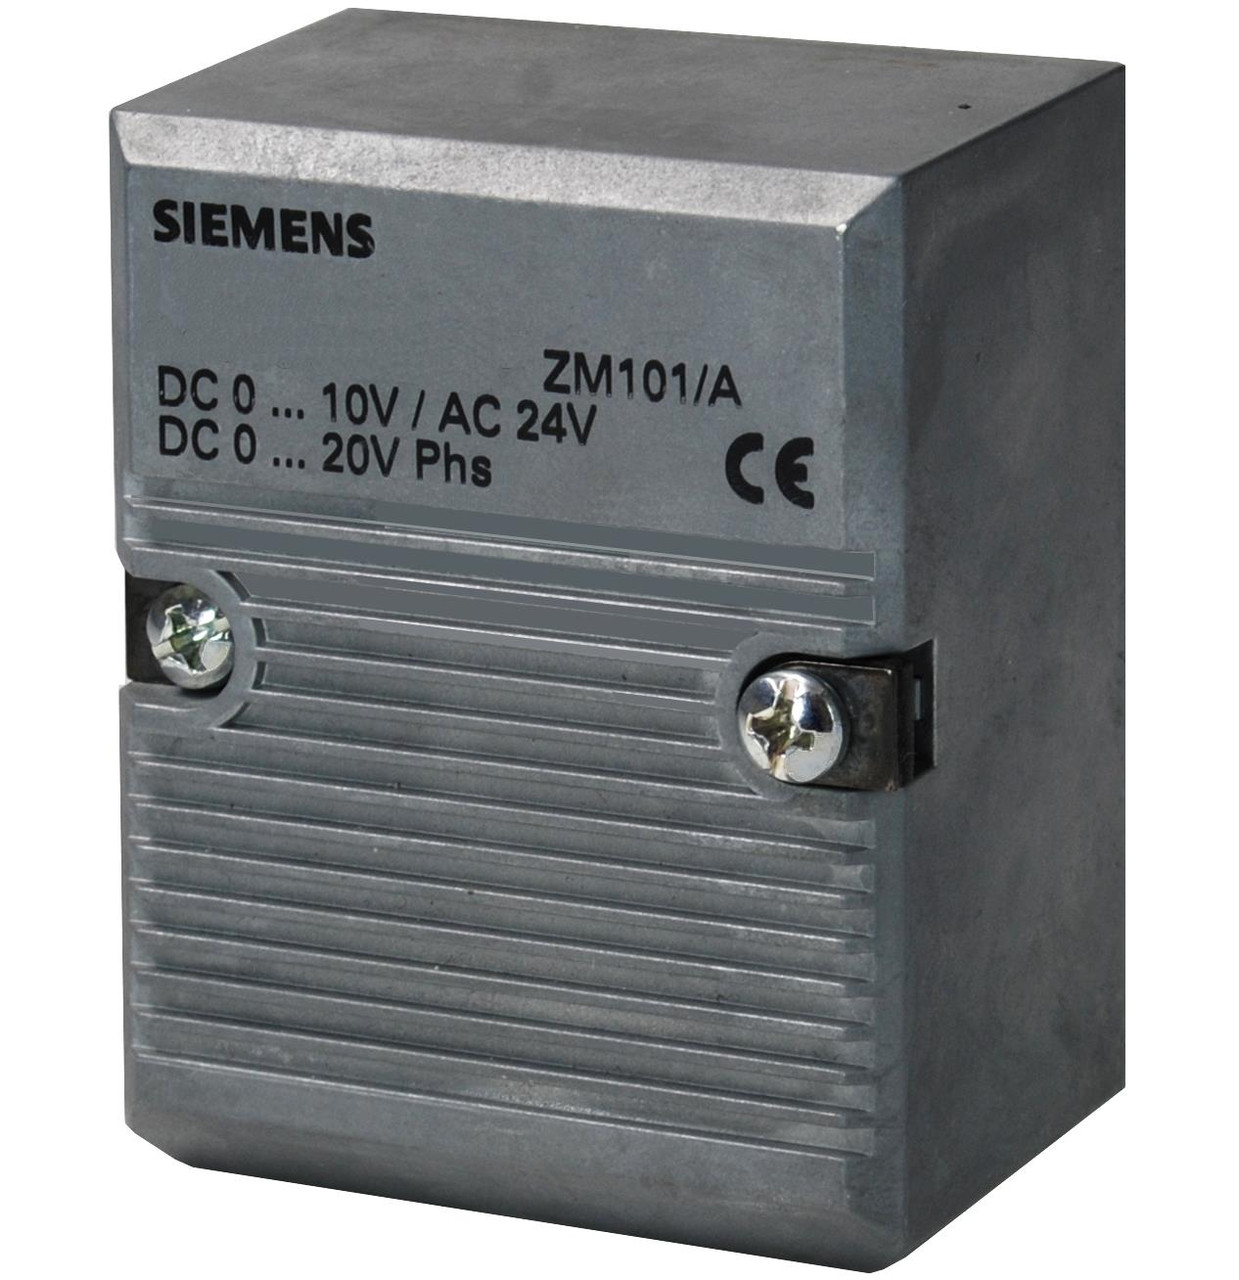 Siemens ZM121/A